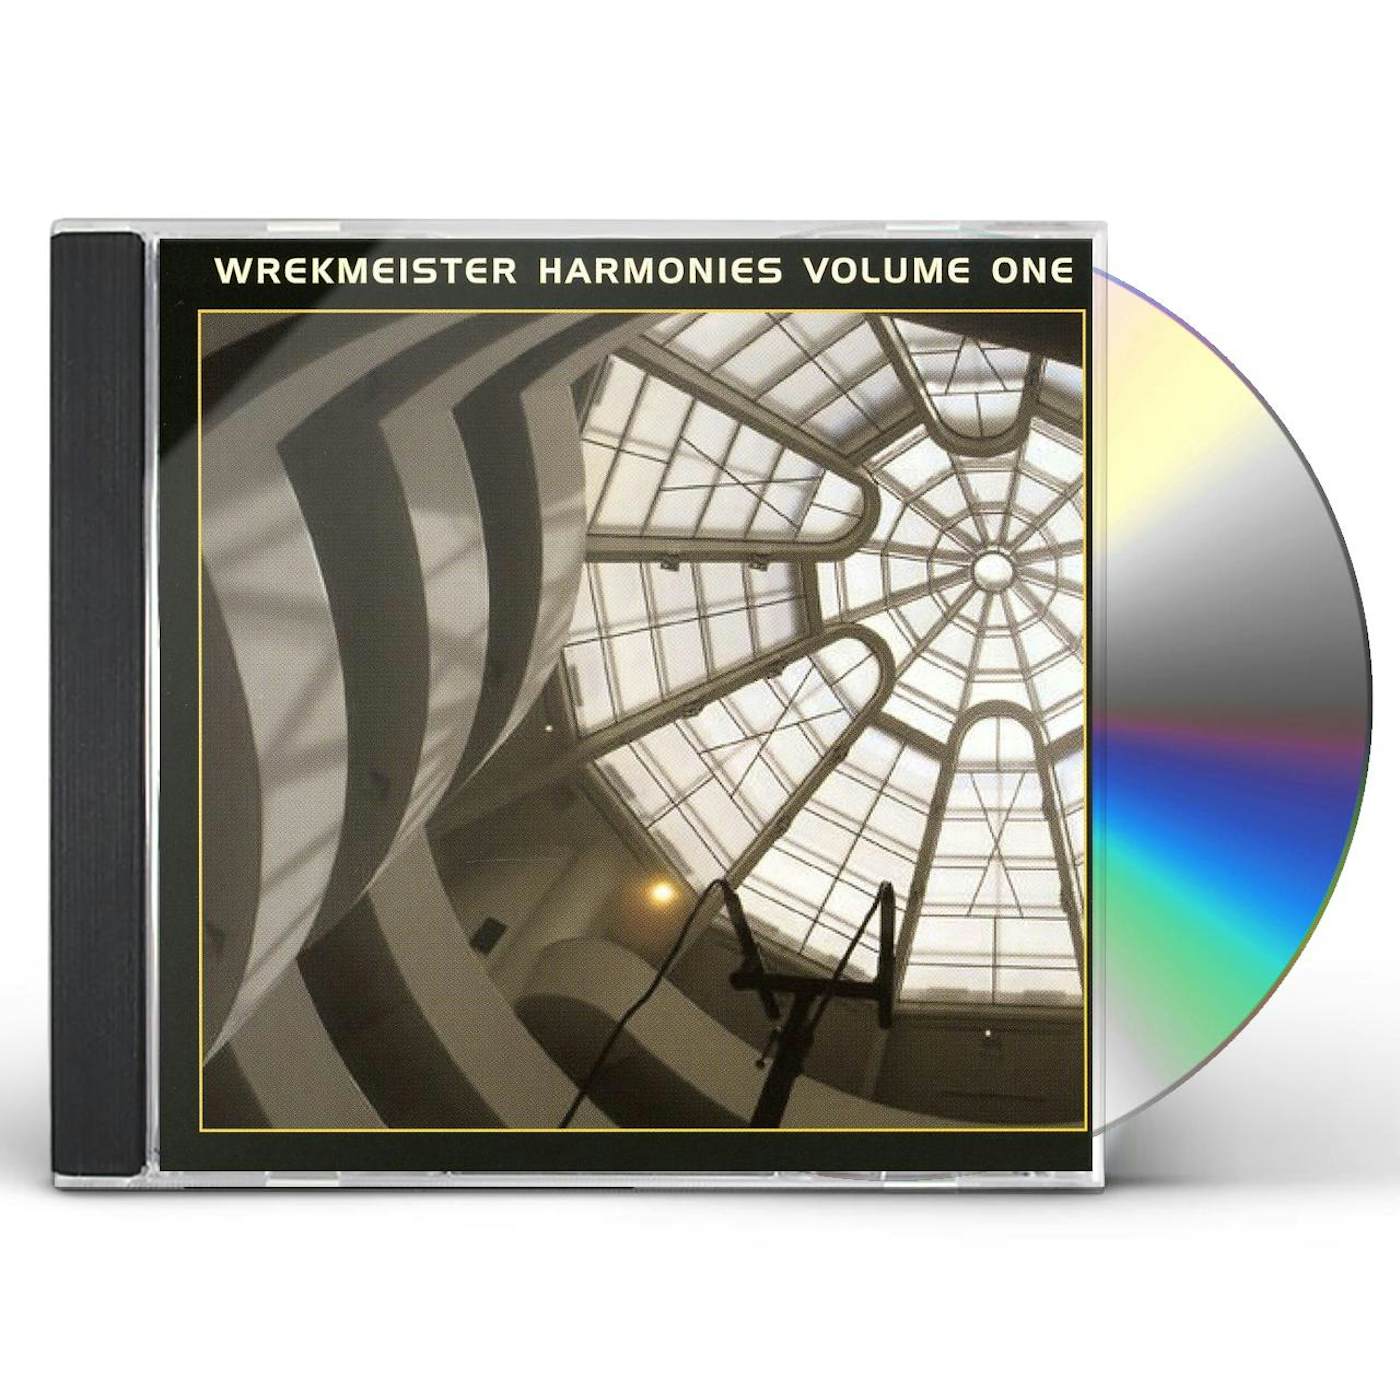 Wrekmeister Harmonies RECORDINGS MADE IN PUBLIC SPACES CD